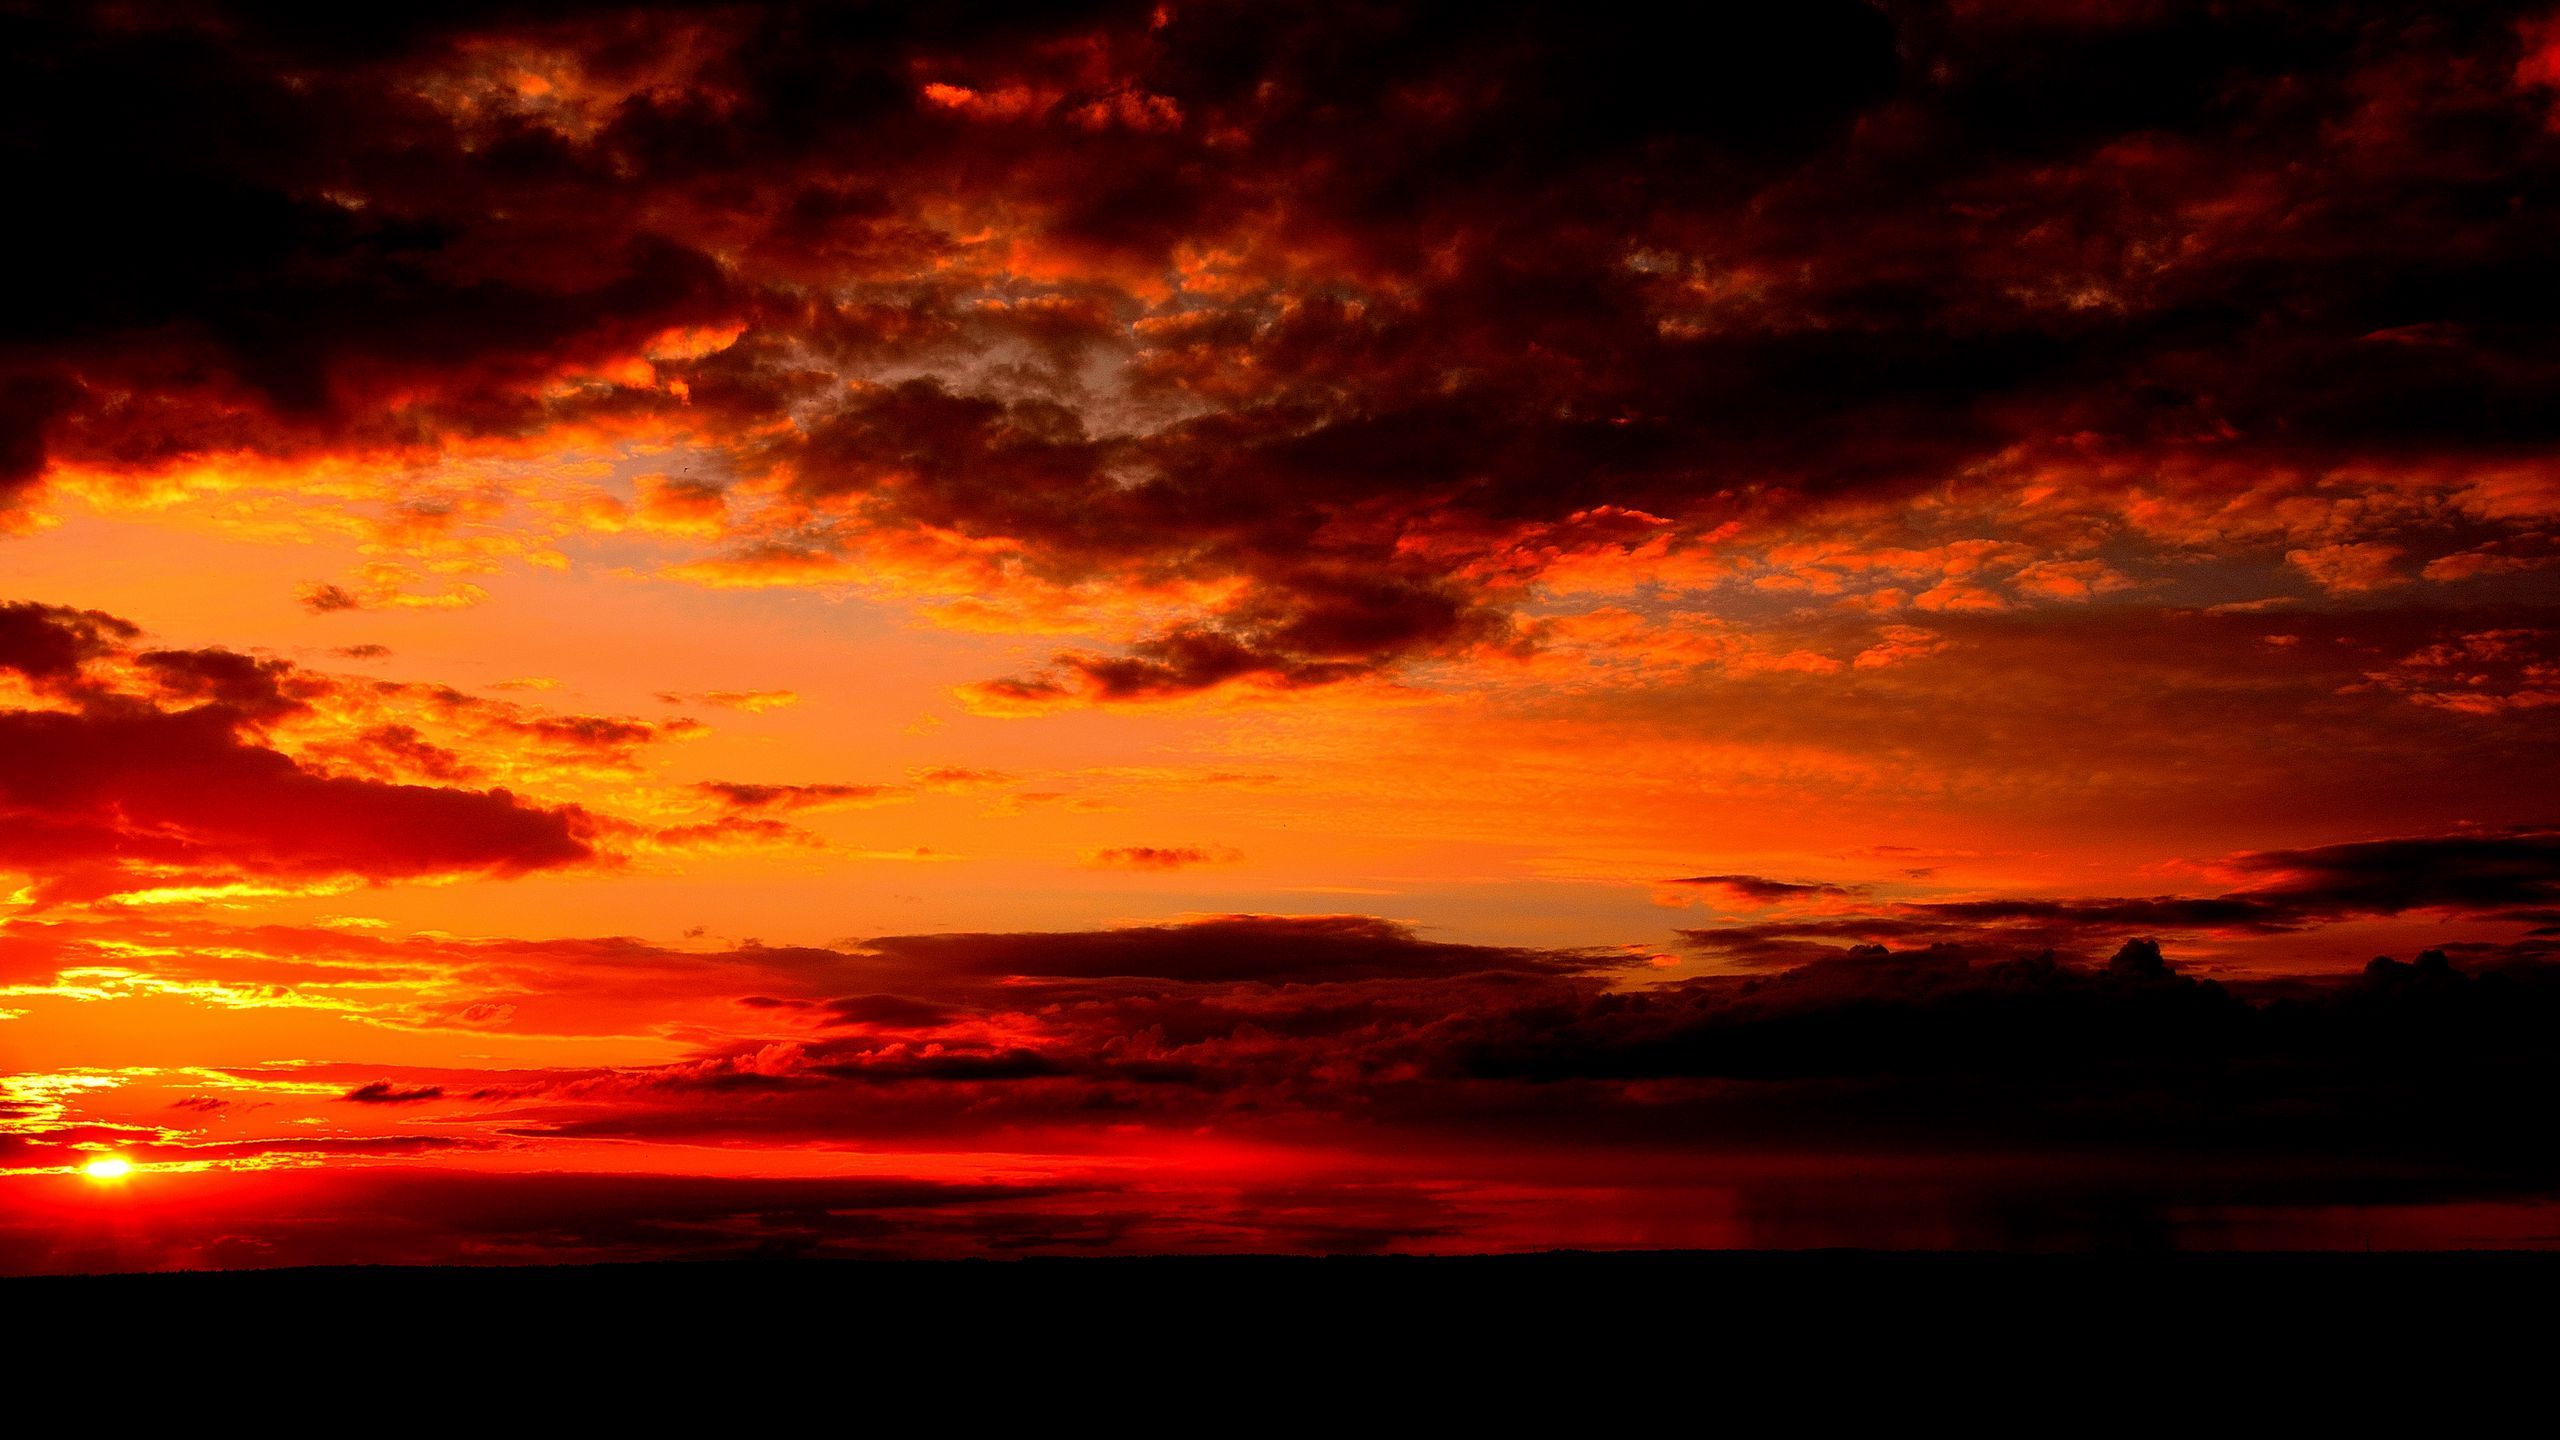 A red and orange sunset with clouds. - Dark orange